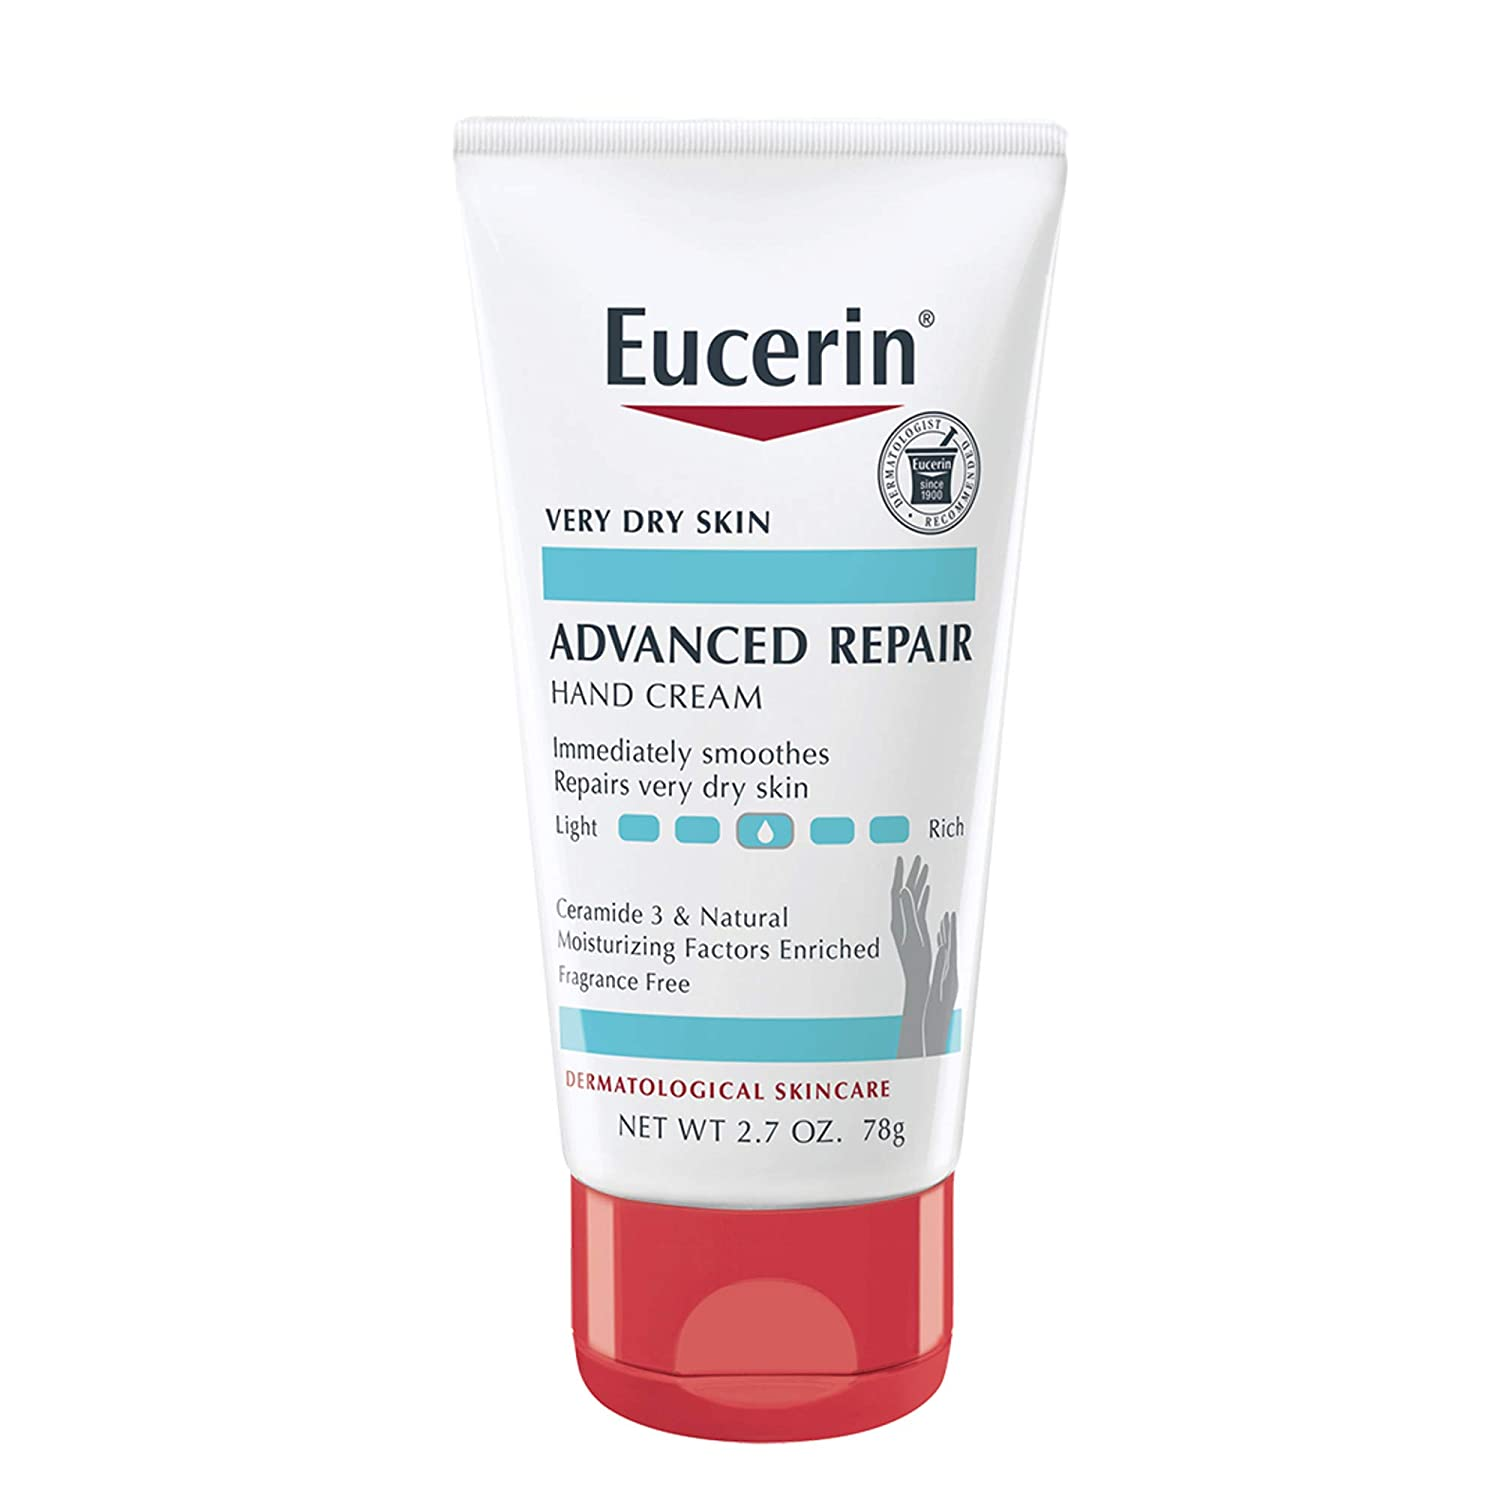 3 Eucerin Advanced Repair Hand Creme, 2.7 Ounce $5.72